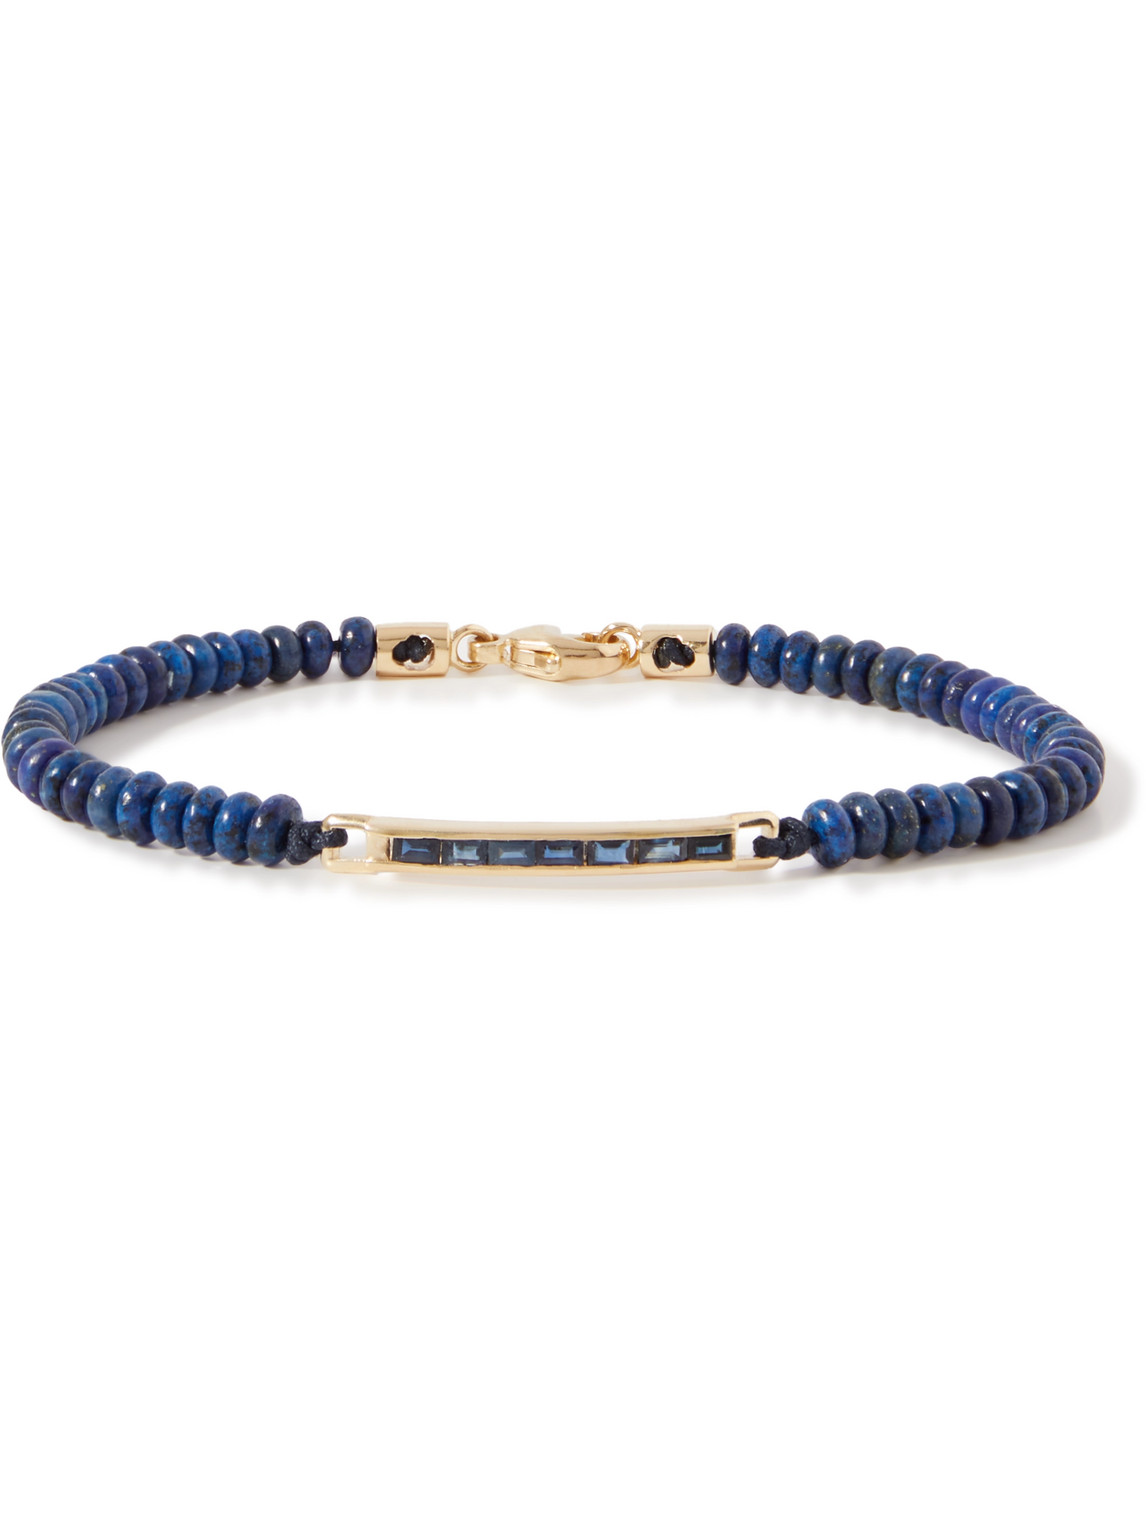 Luis Morais Gold, Lapis Lazuli And Sapphire Beaded Bracelet In Blue